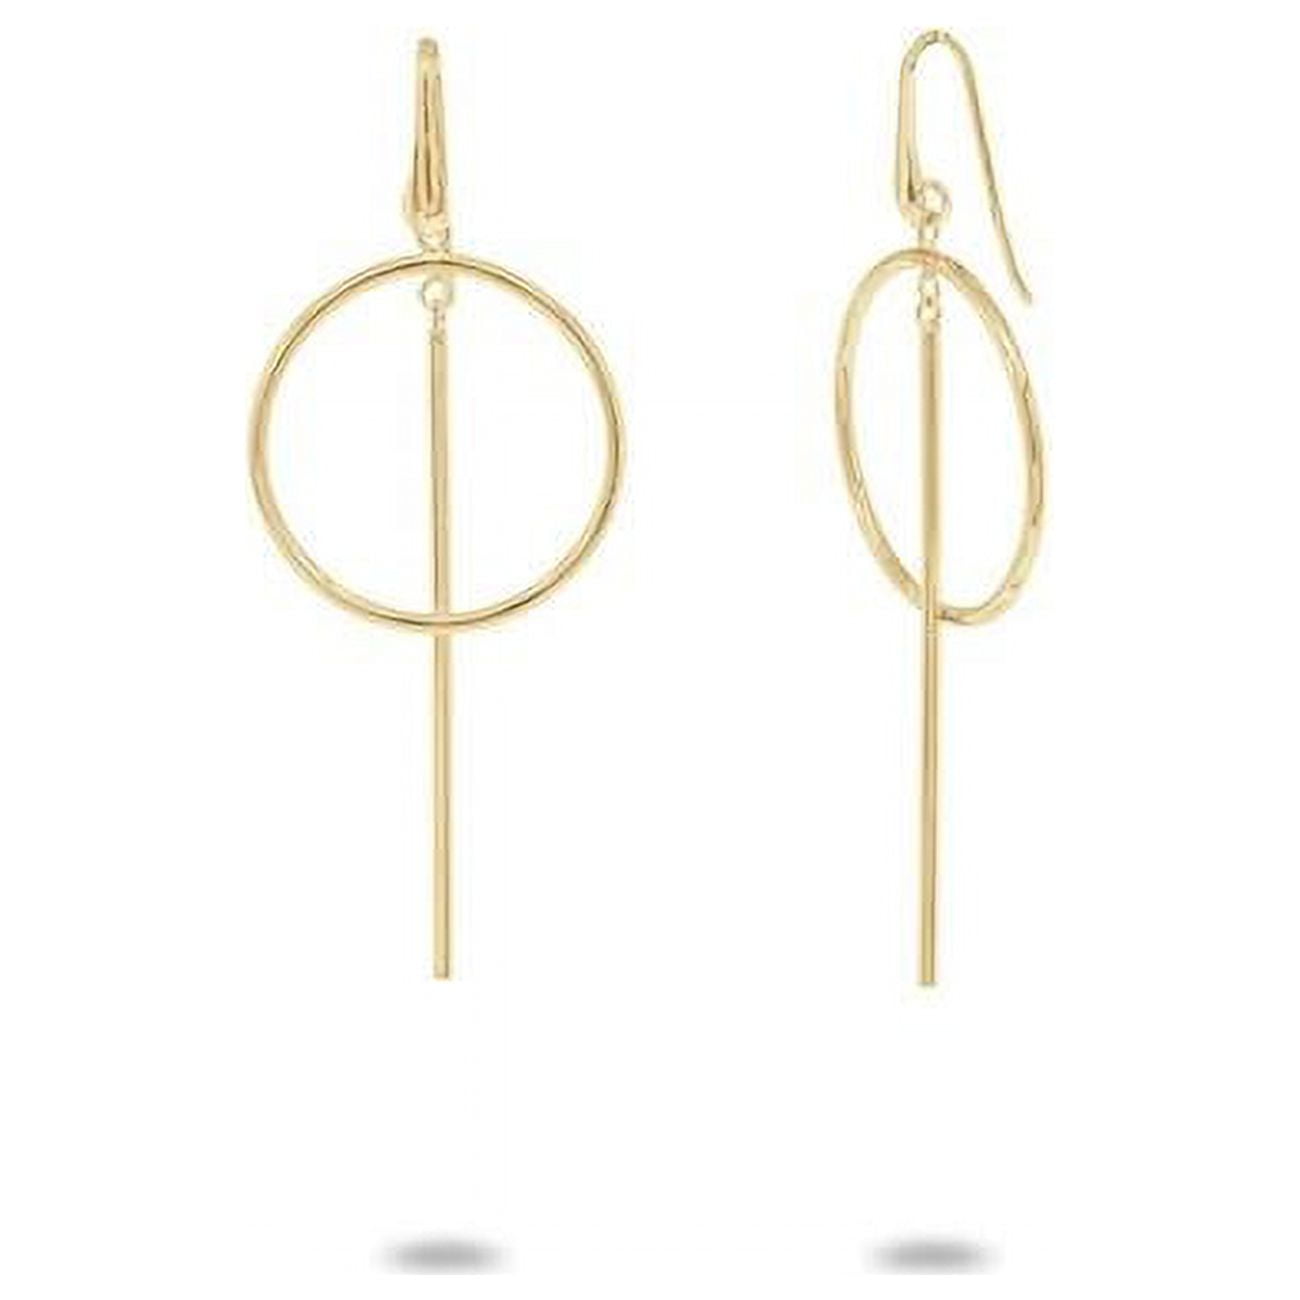 325135g Golden Geometric Circle Earrings With Dangling Bar